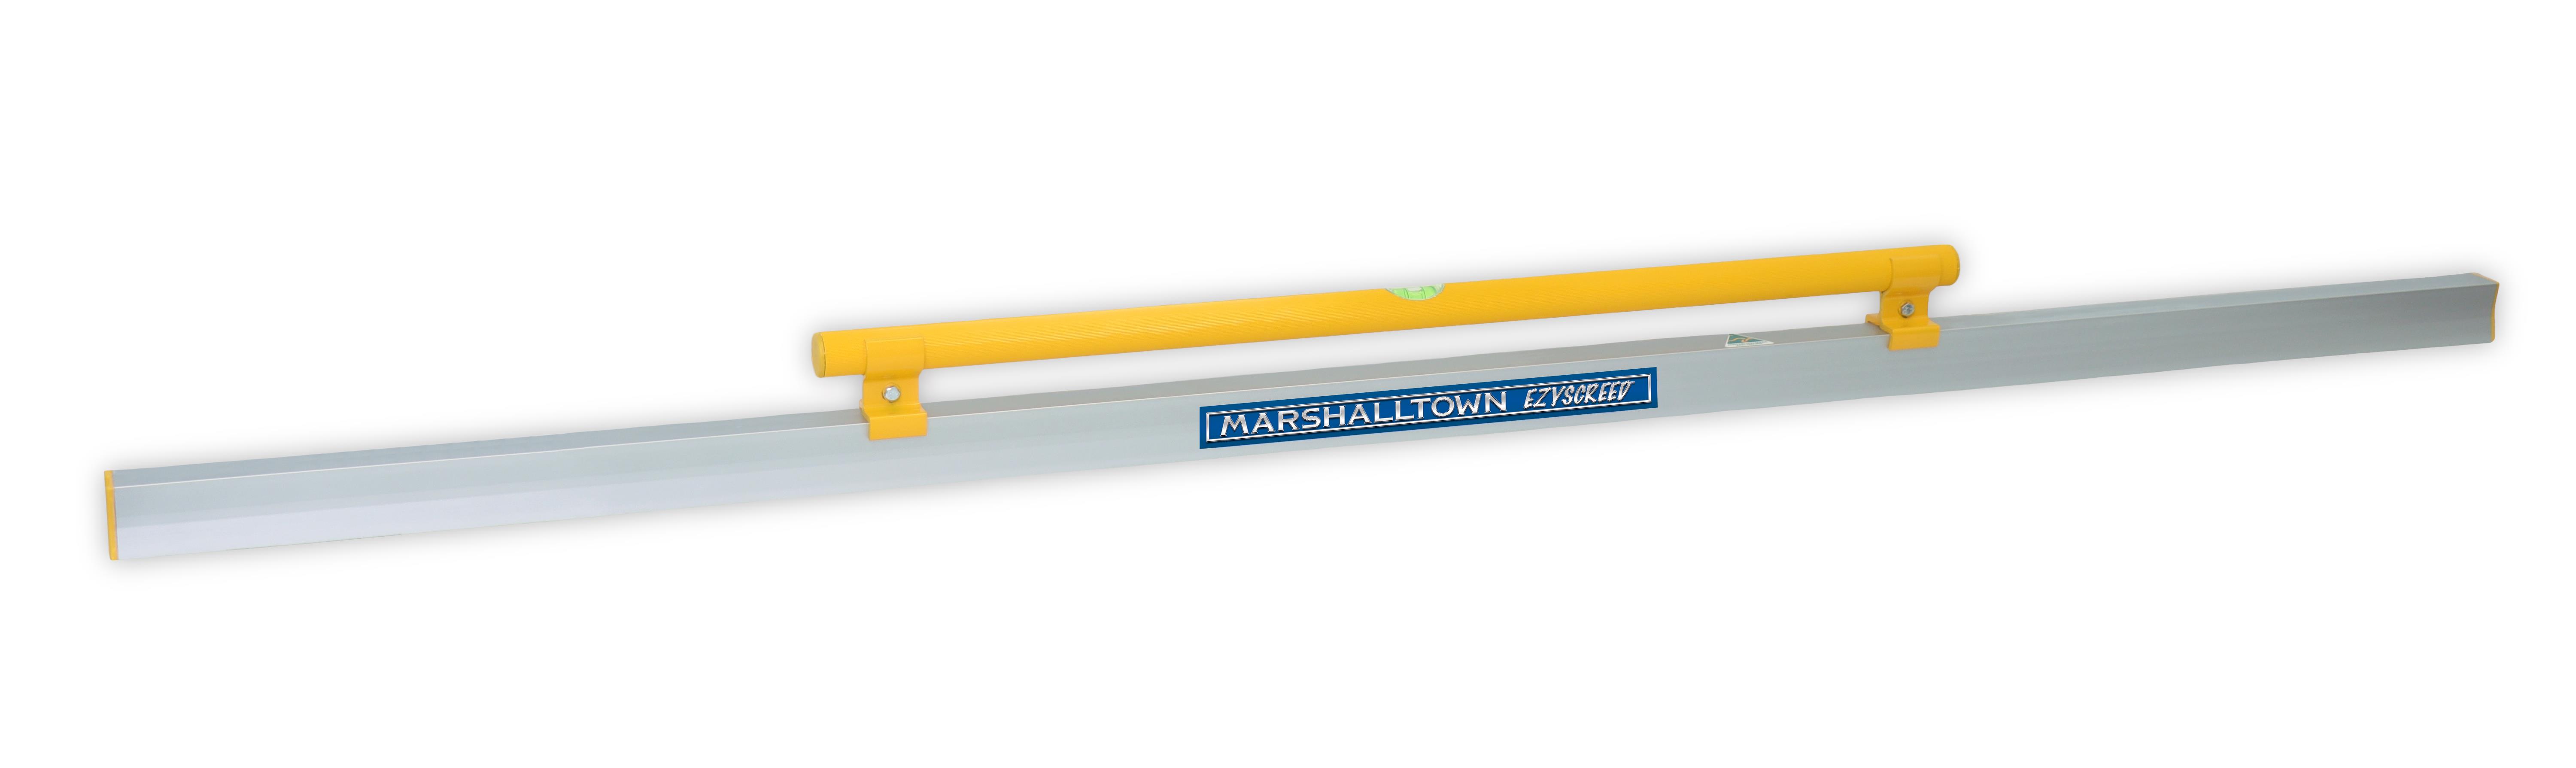 Marshalltown (28400) product